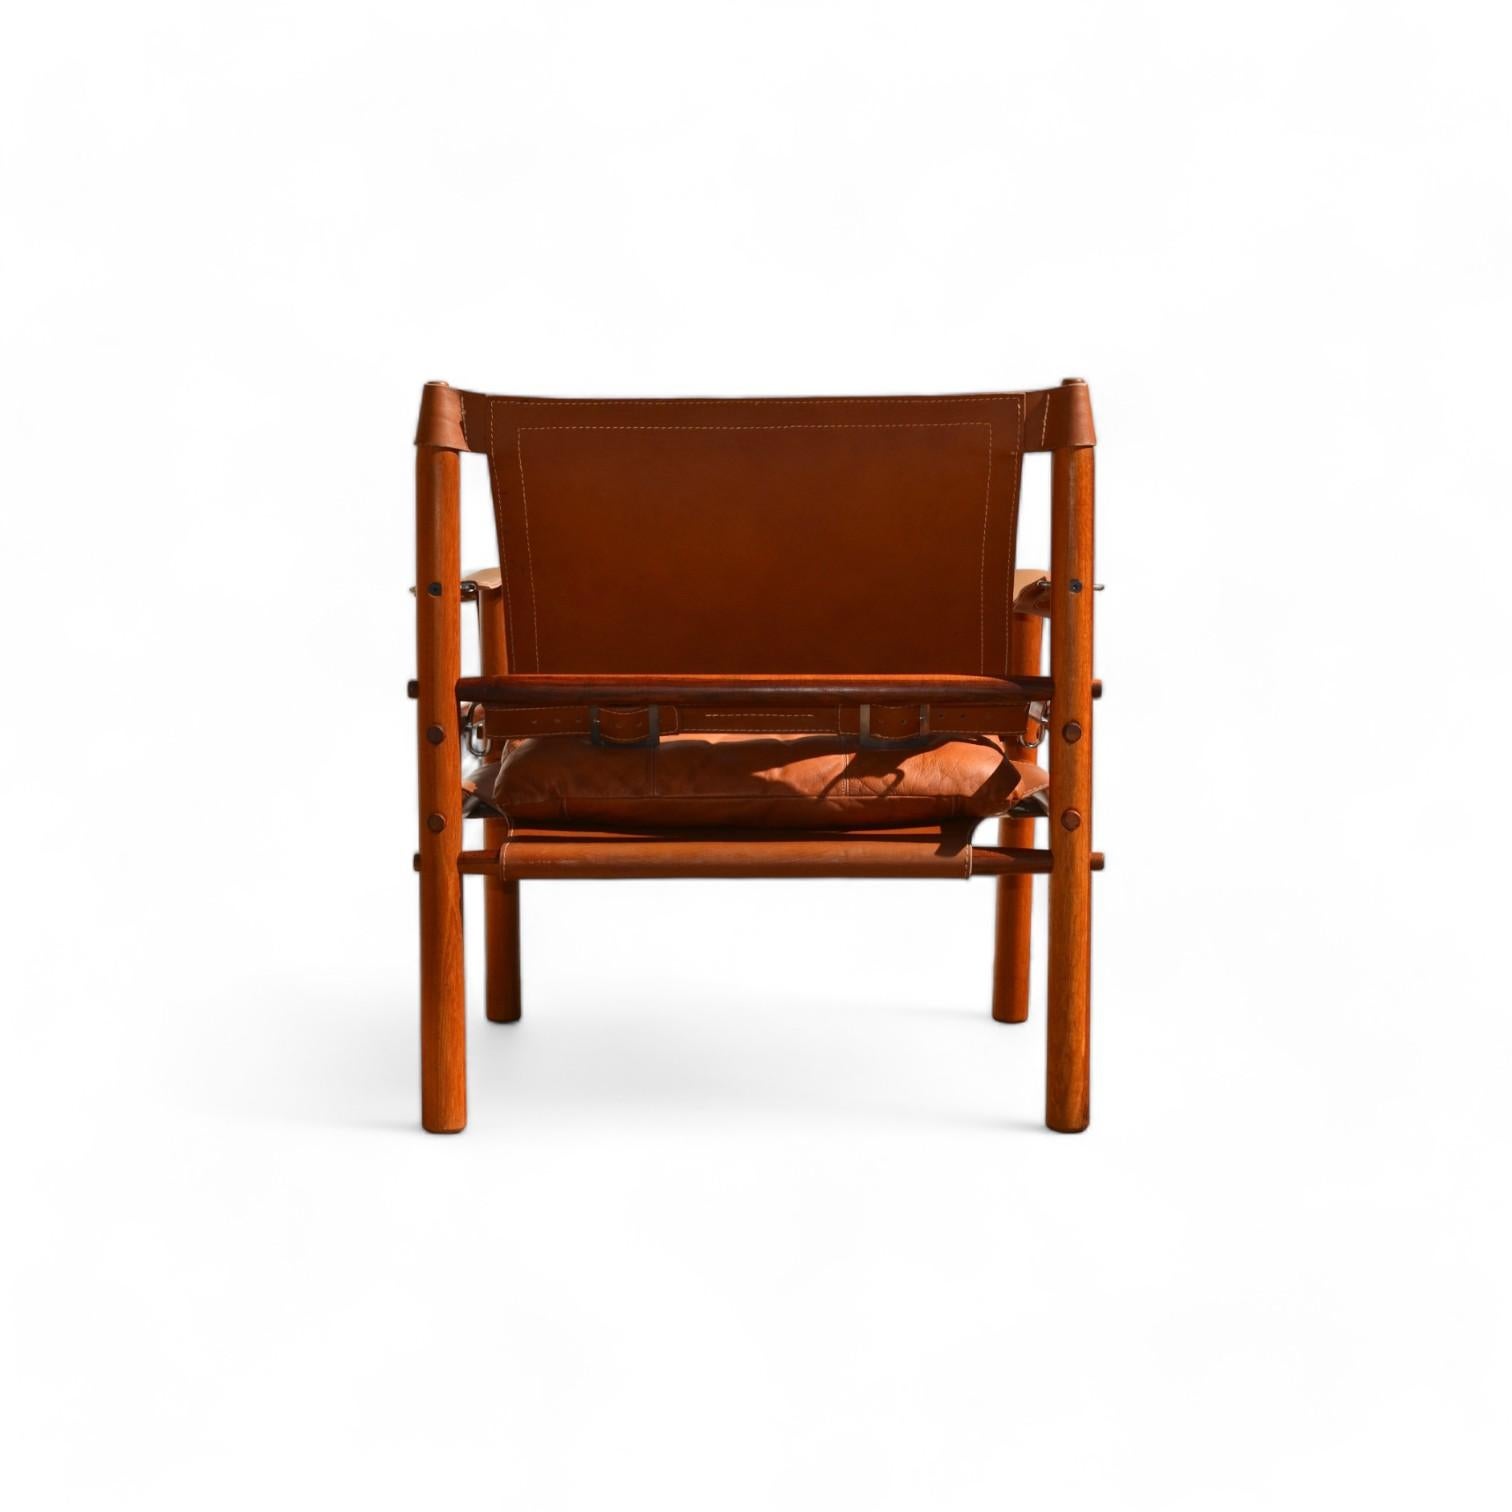 Sirocco teak armchair, Arne Norell, Sweden, 1964 For Sale 1